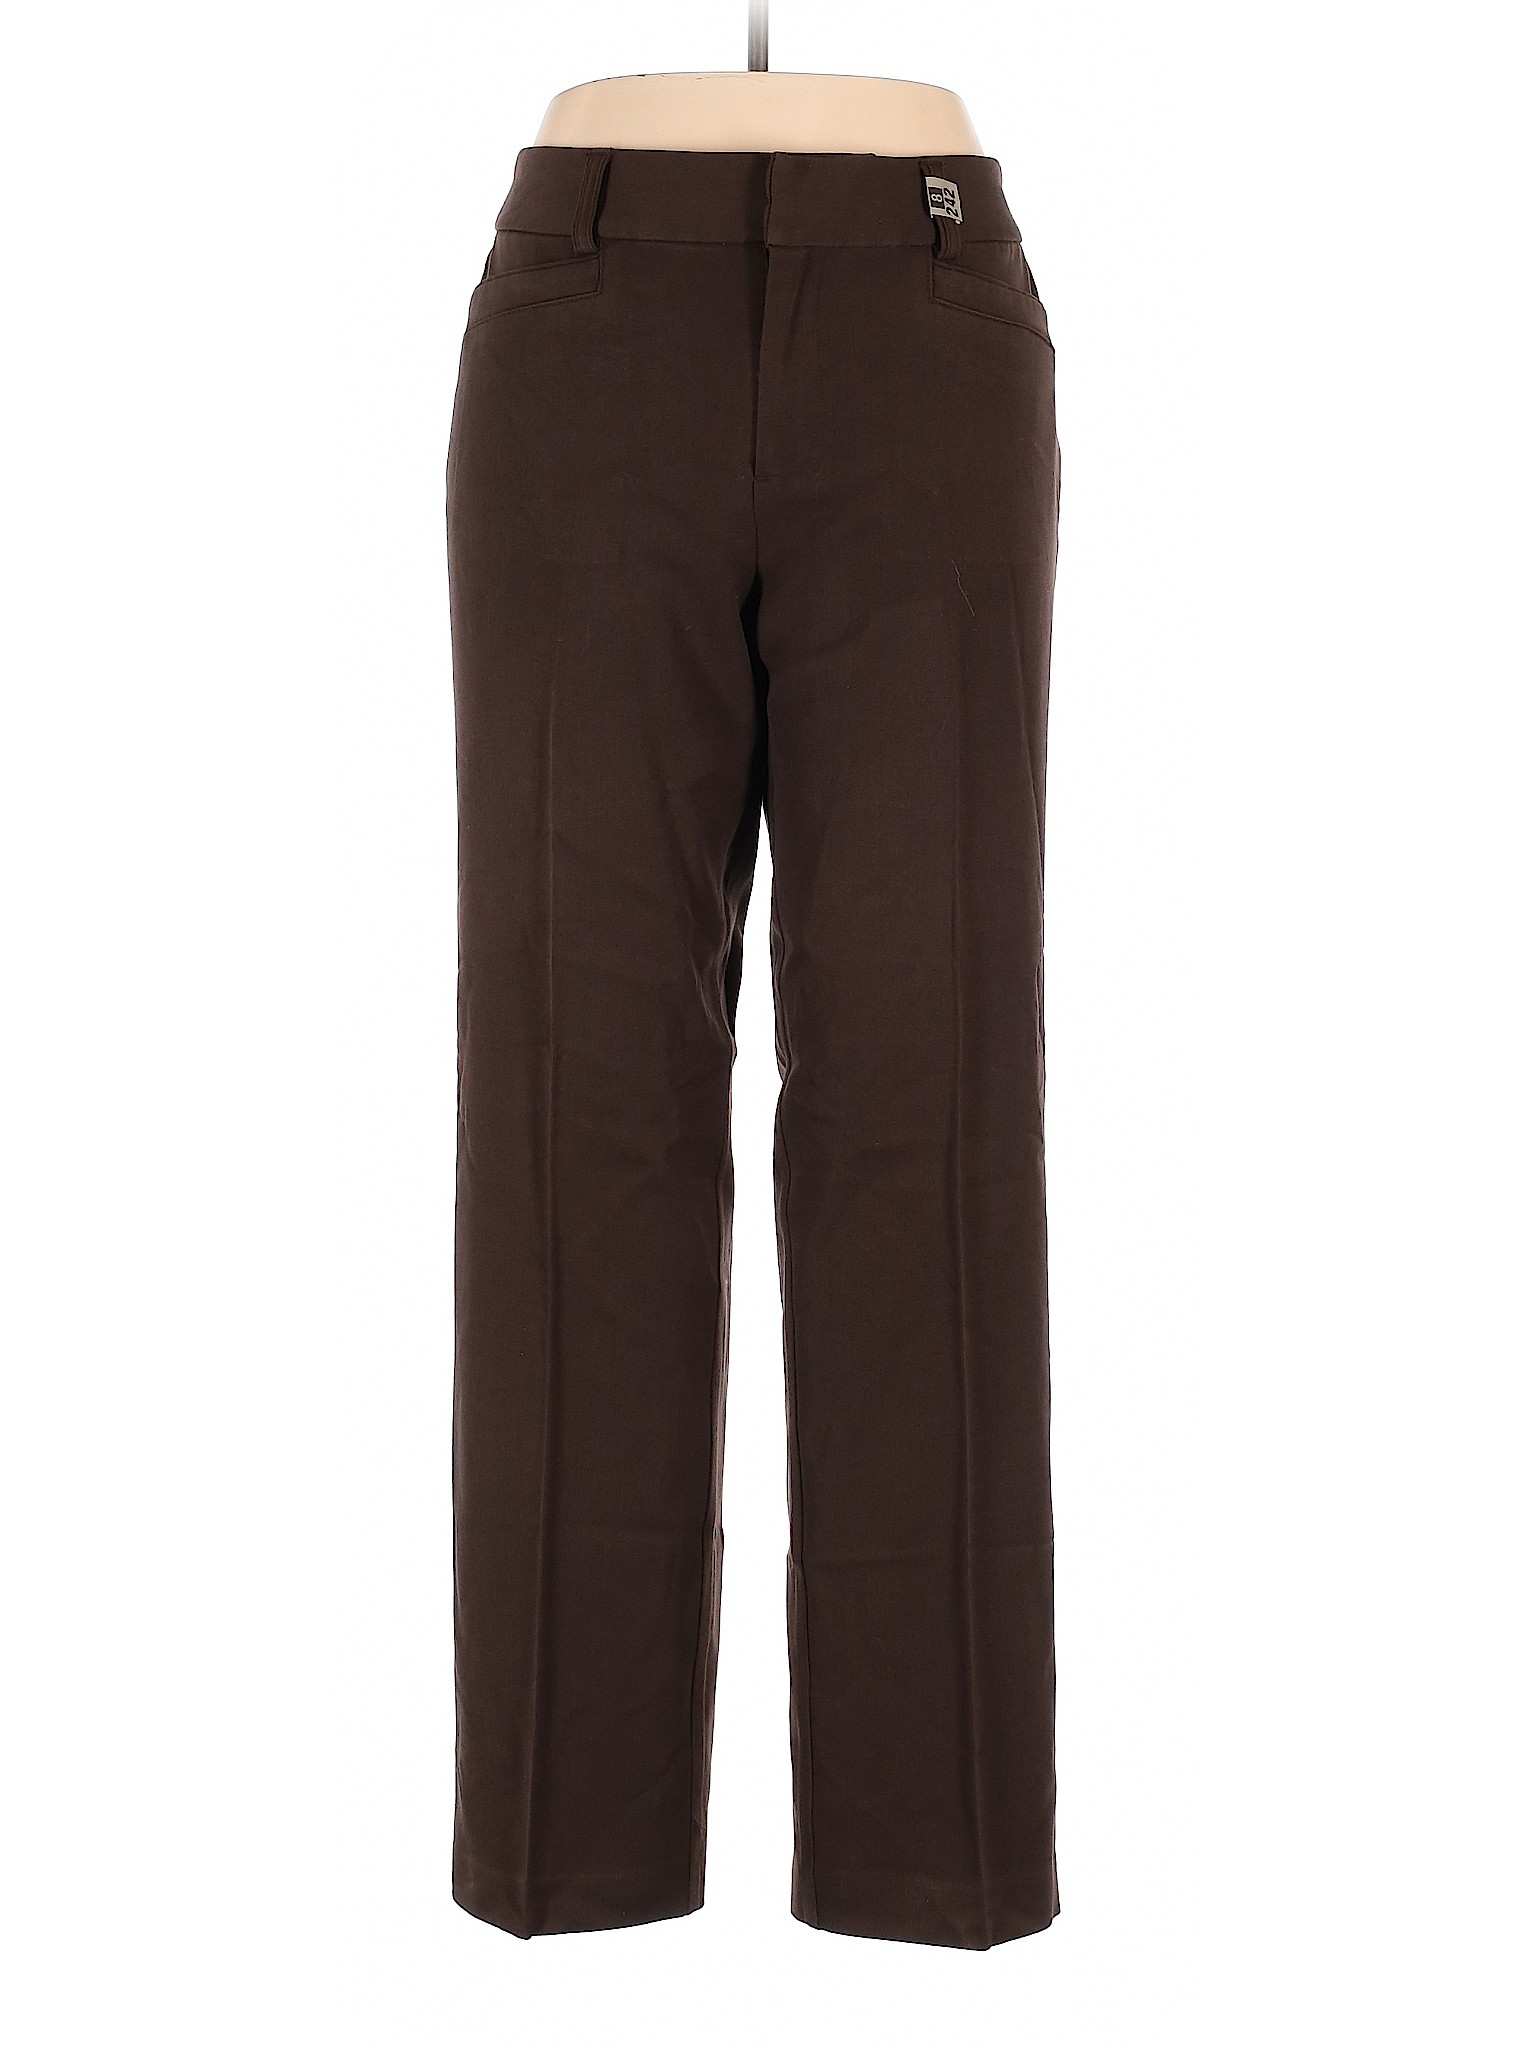 Christopher & Banks Women Brown Dress Pants 14 | eBay